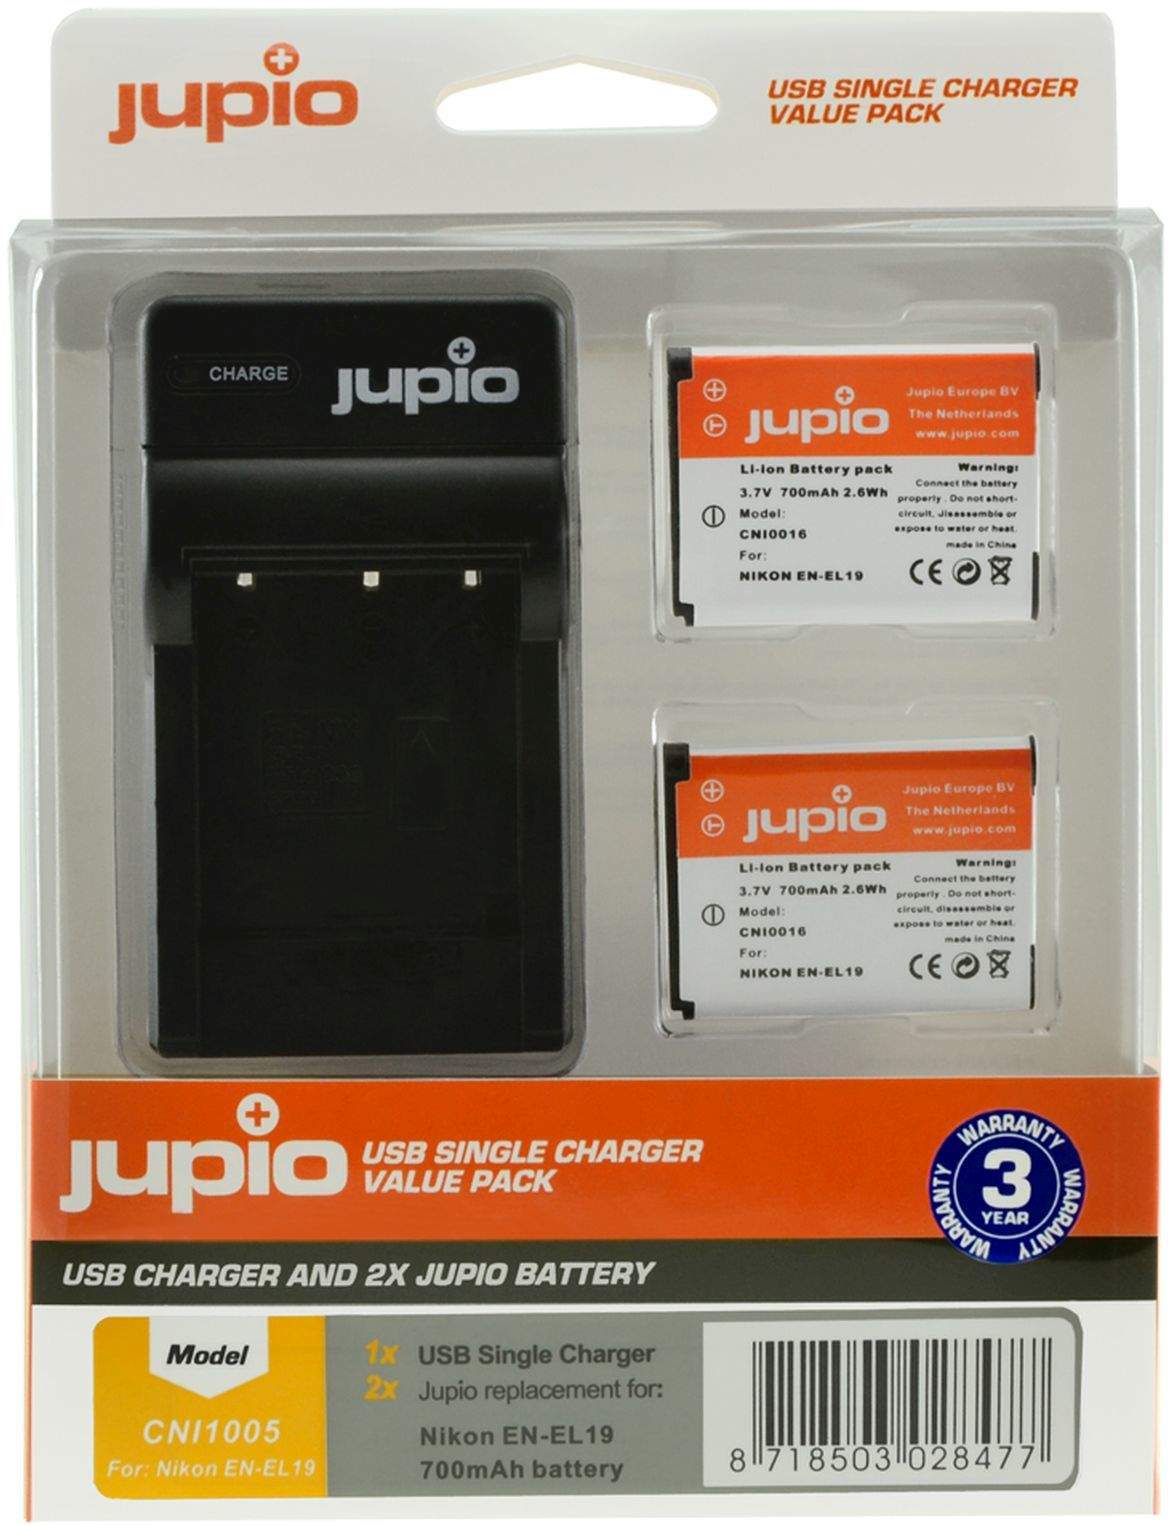 2 x Jupio Nikon EN-EL19 Batteries & Single Charger Kit main image